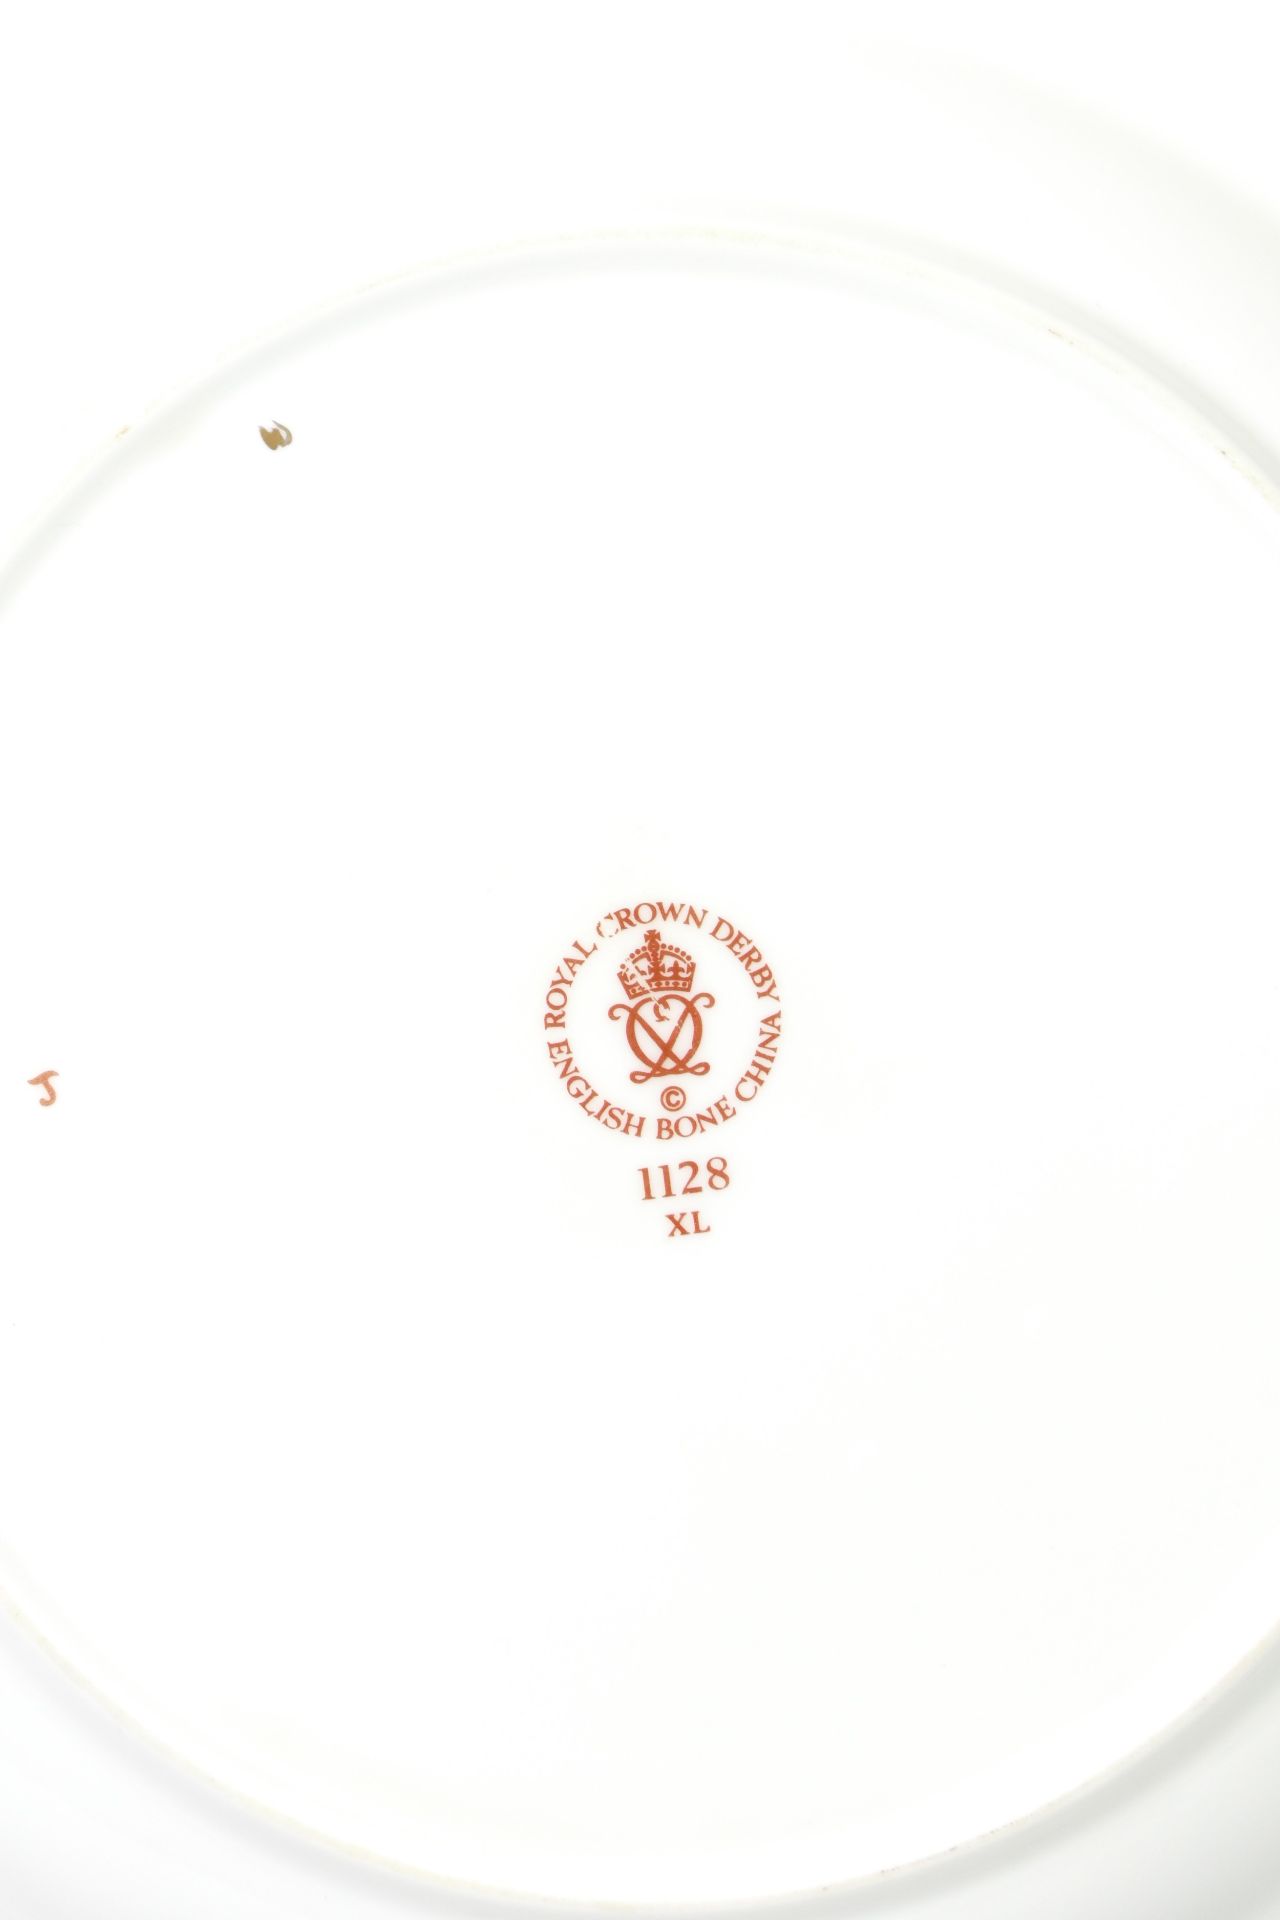 A large Royal Crown Derby porcelain Imari pattern plate, 1128. 27cm diameter. - Image 2 of 3